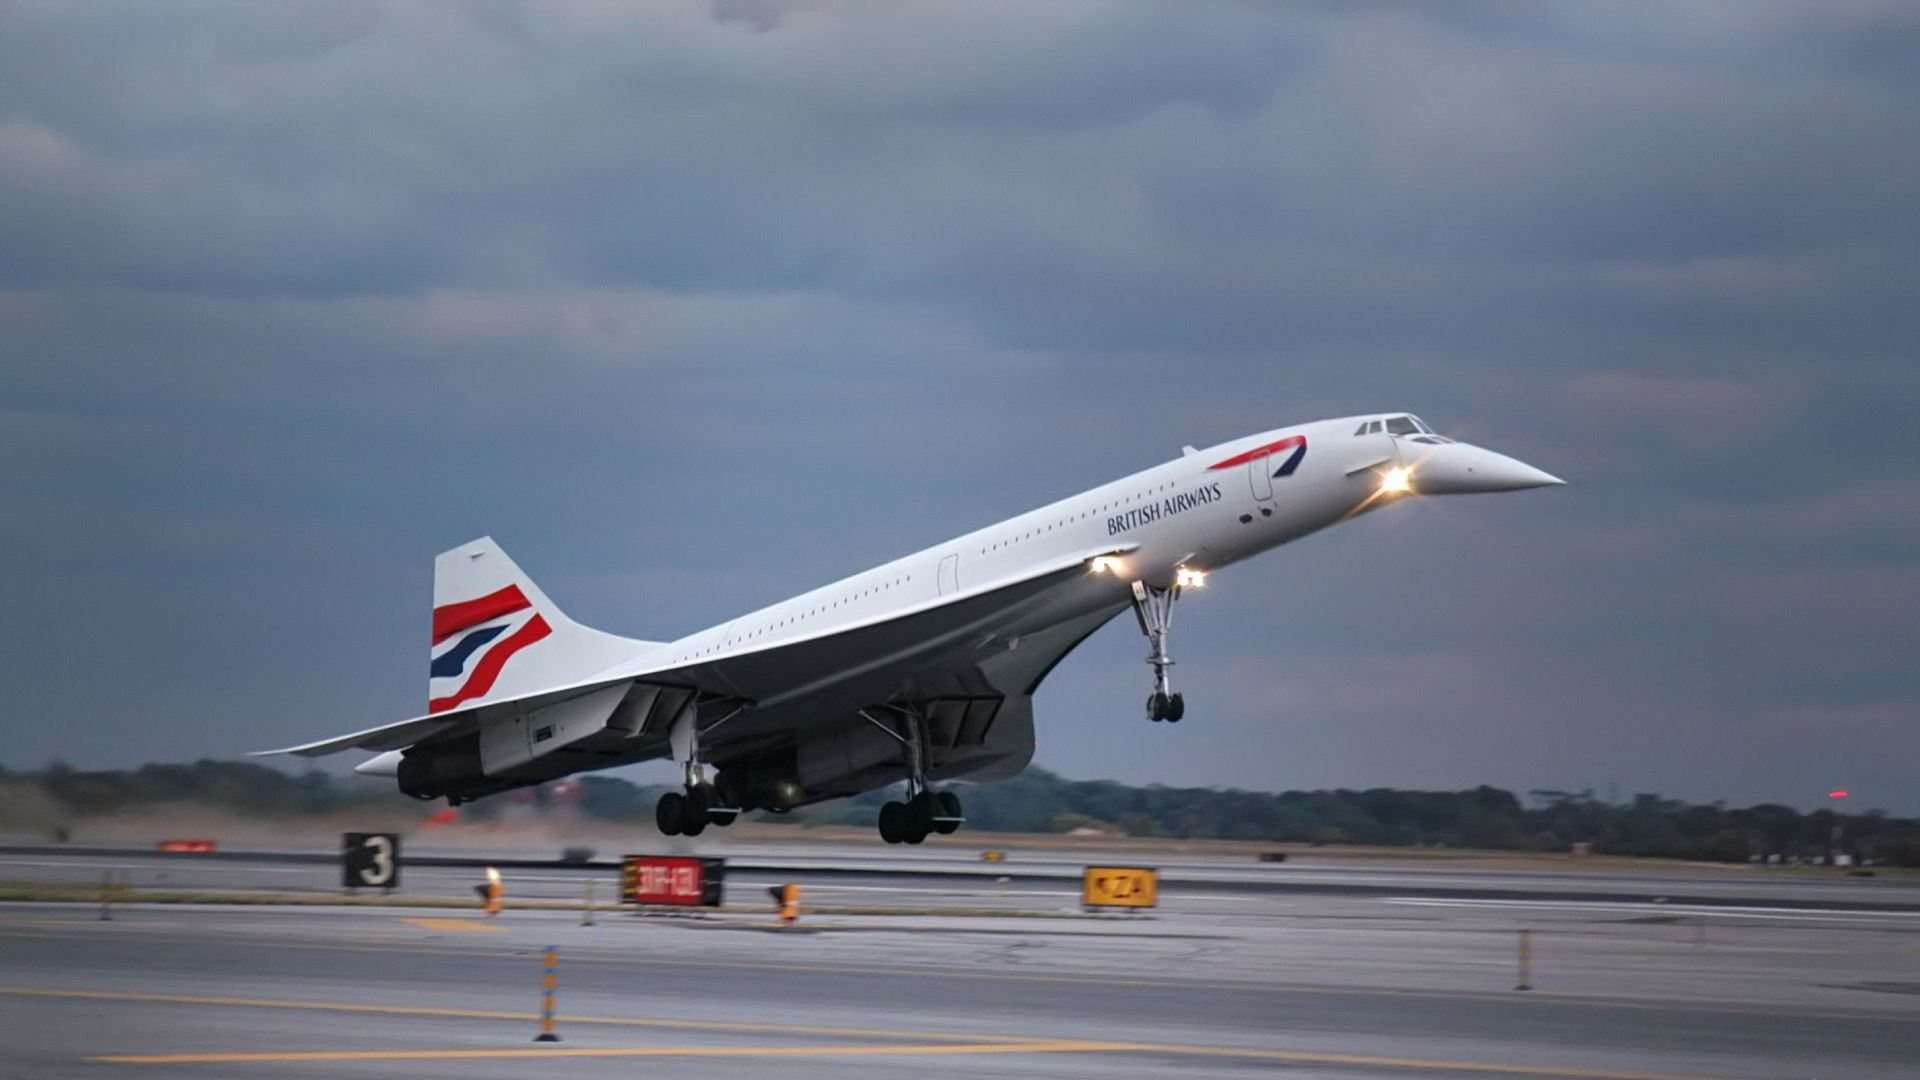 Top Wallpaper 2016: Concorde Wallpaper, Awesome Concorde